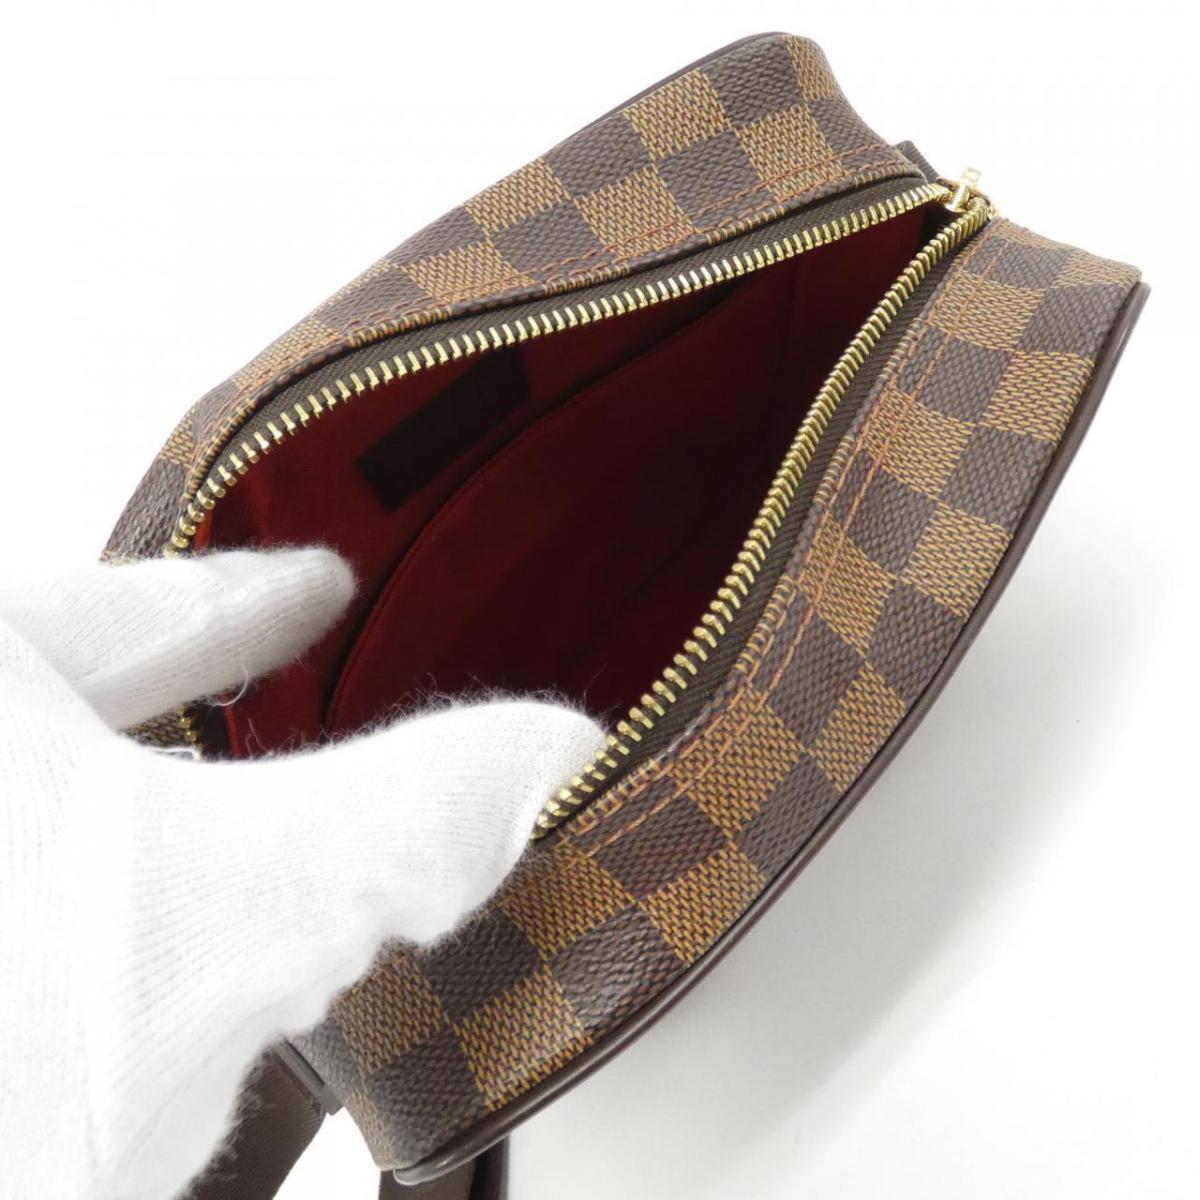 Louis Vuitton Damier Olaf PM N41442 Shoulder Bag